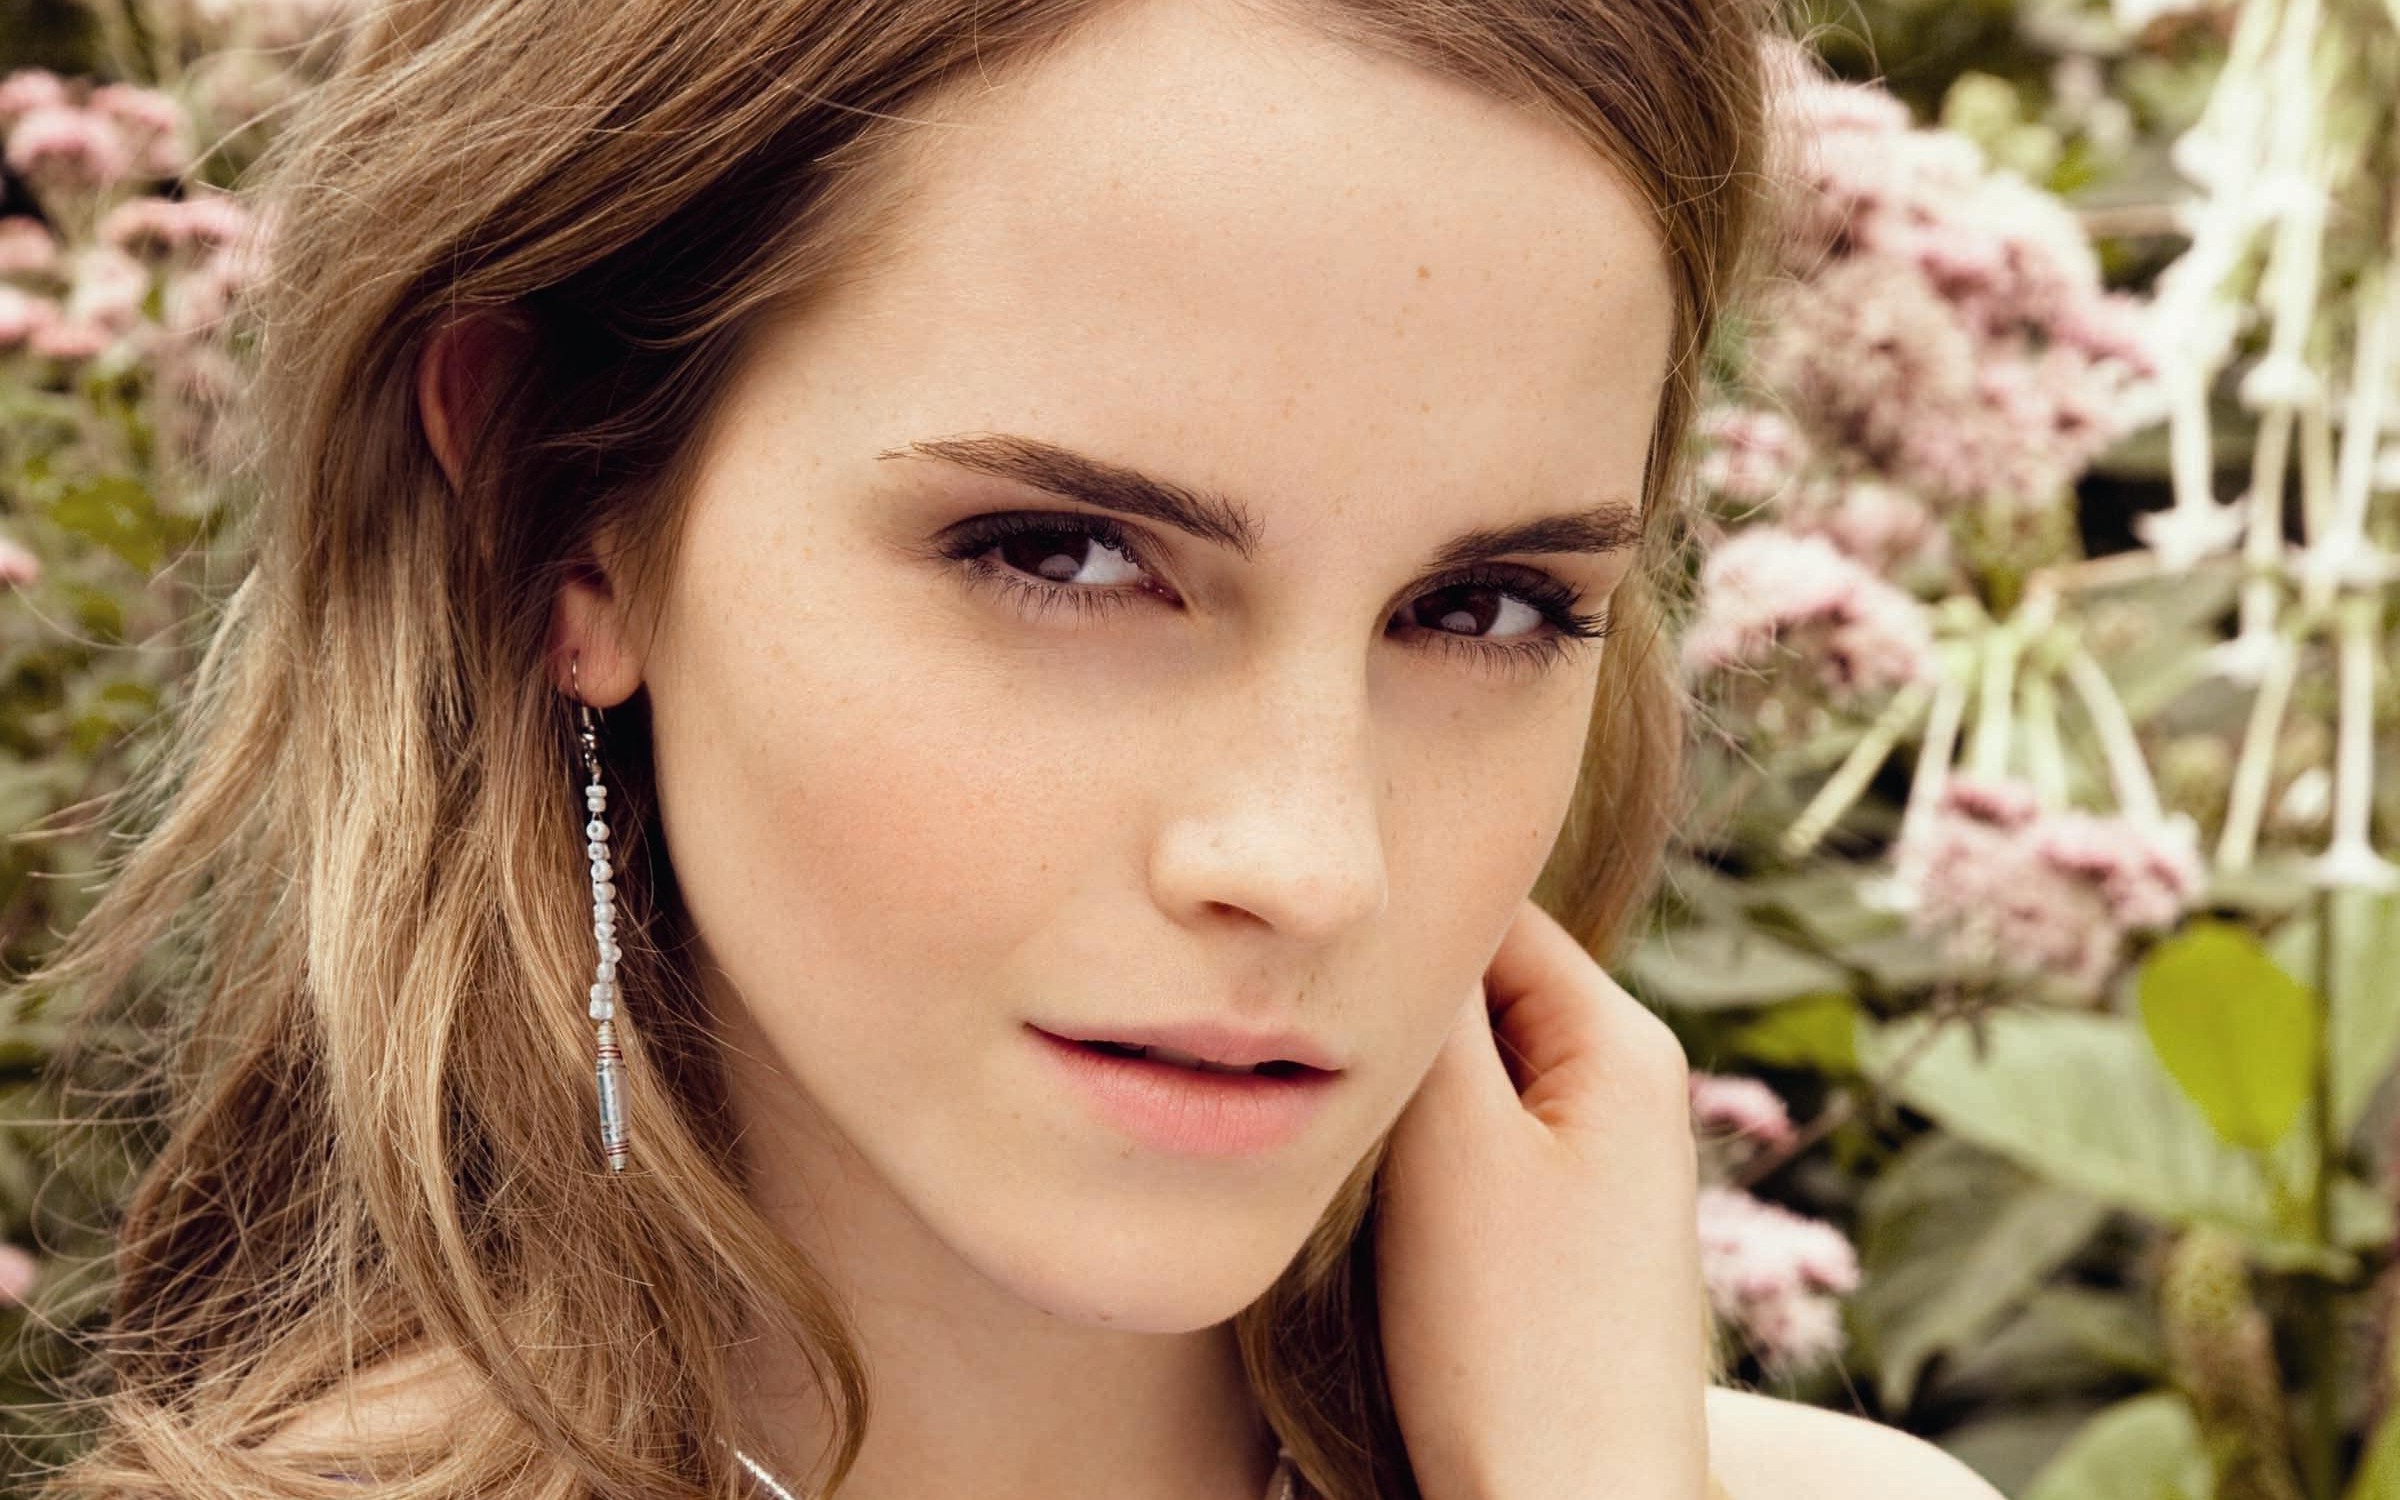 Emma Watson Actress Celebrity Auburn Hair Women Face Looking At Viewer Sensual Gaze